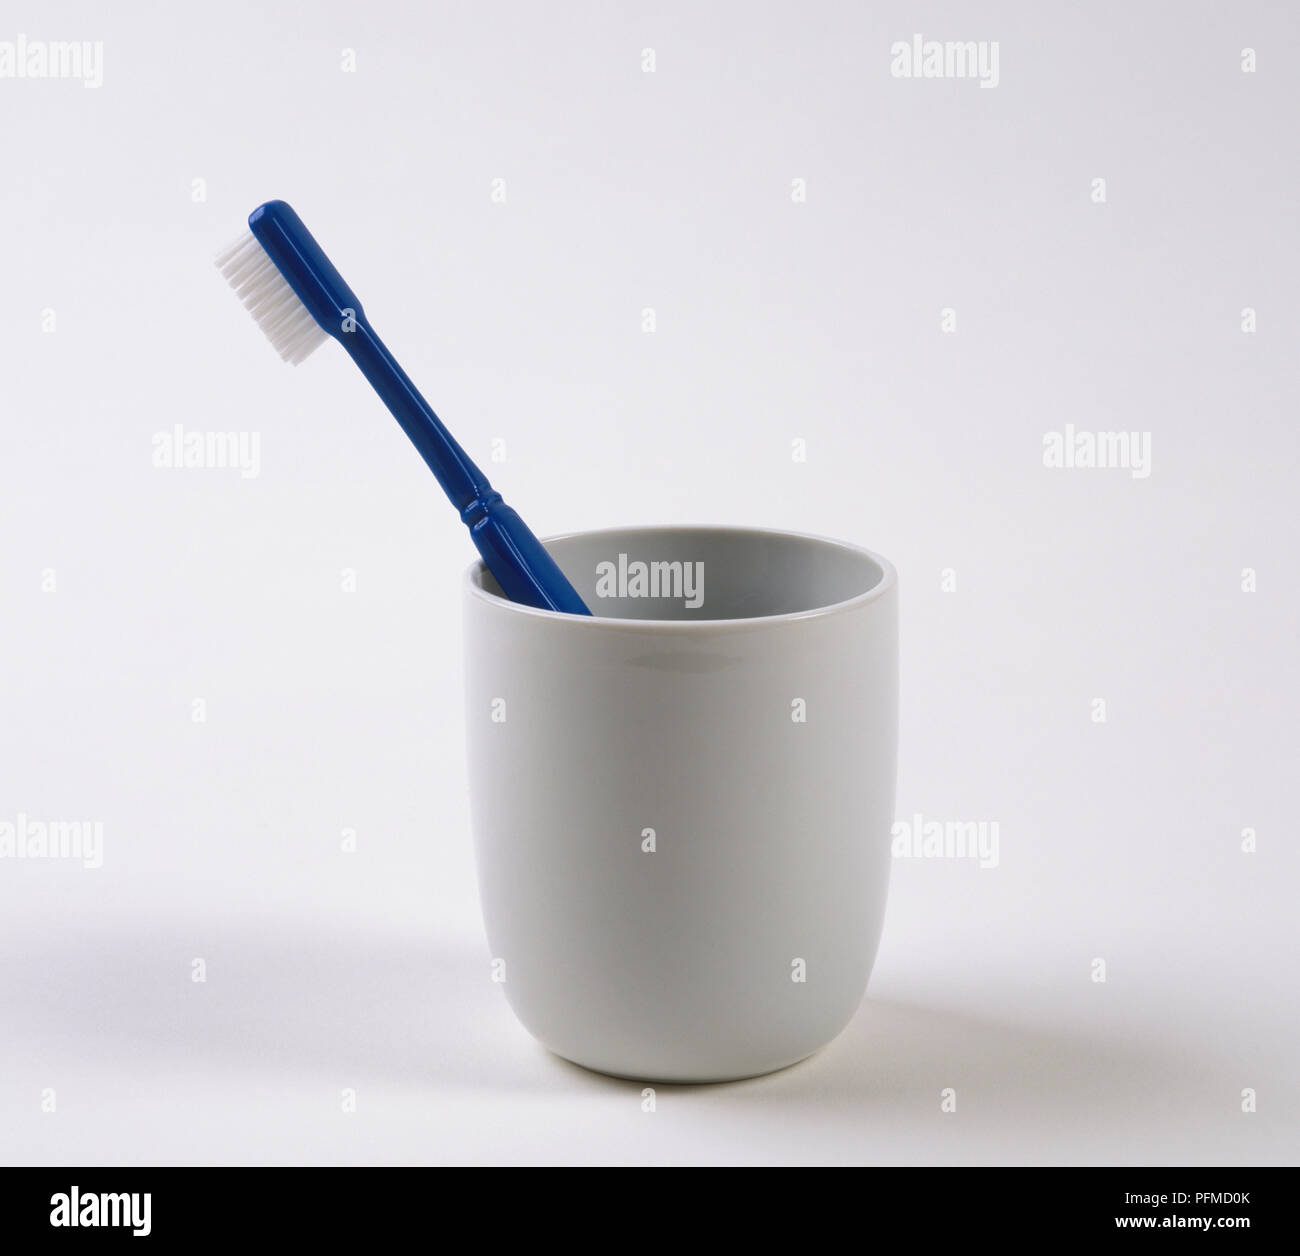 156). Toothbrush in a ceramic mug Stock Photo